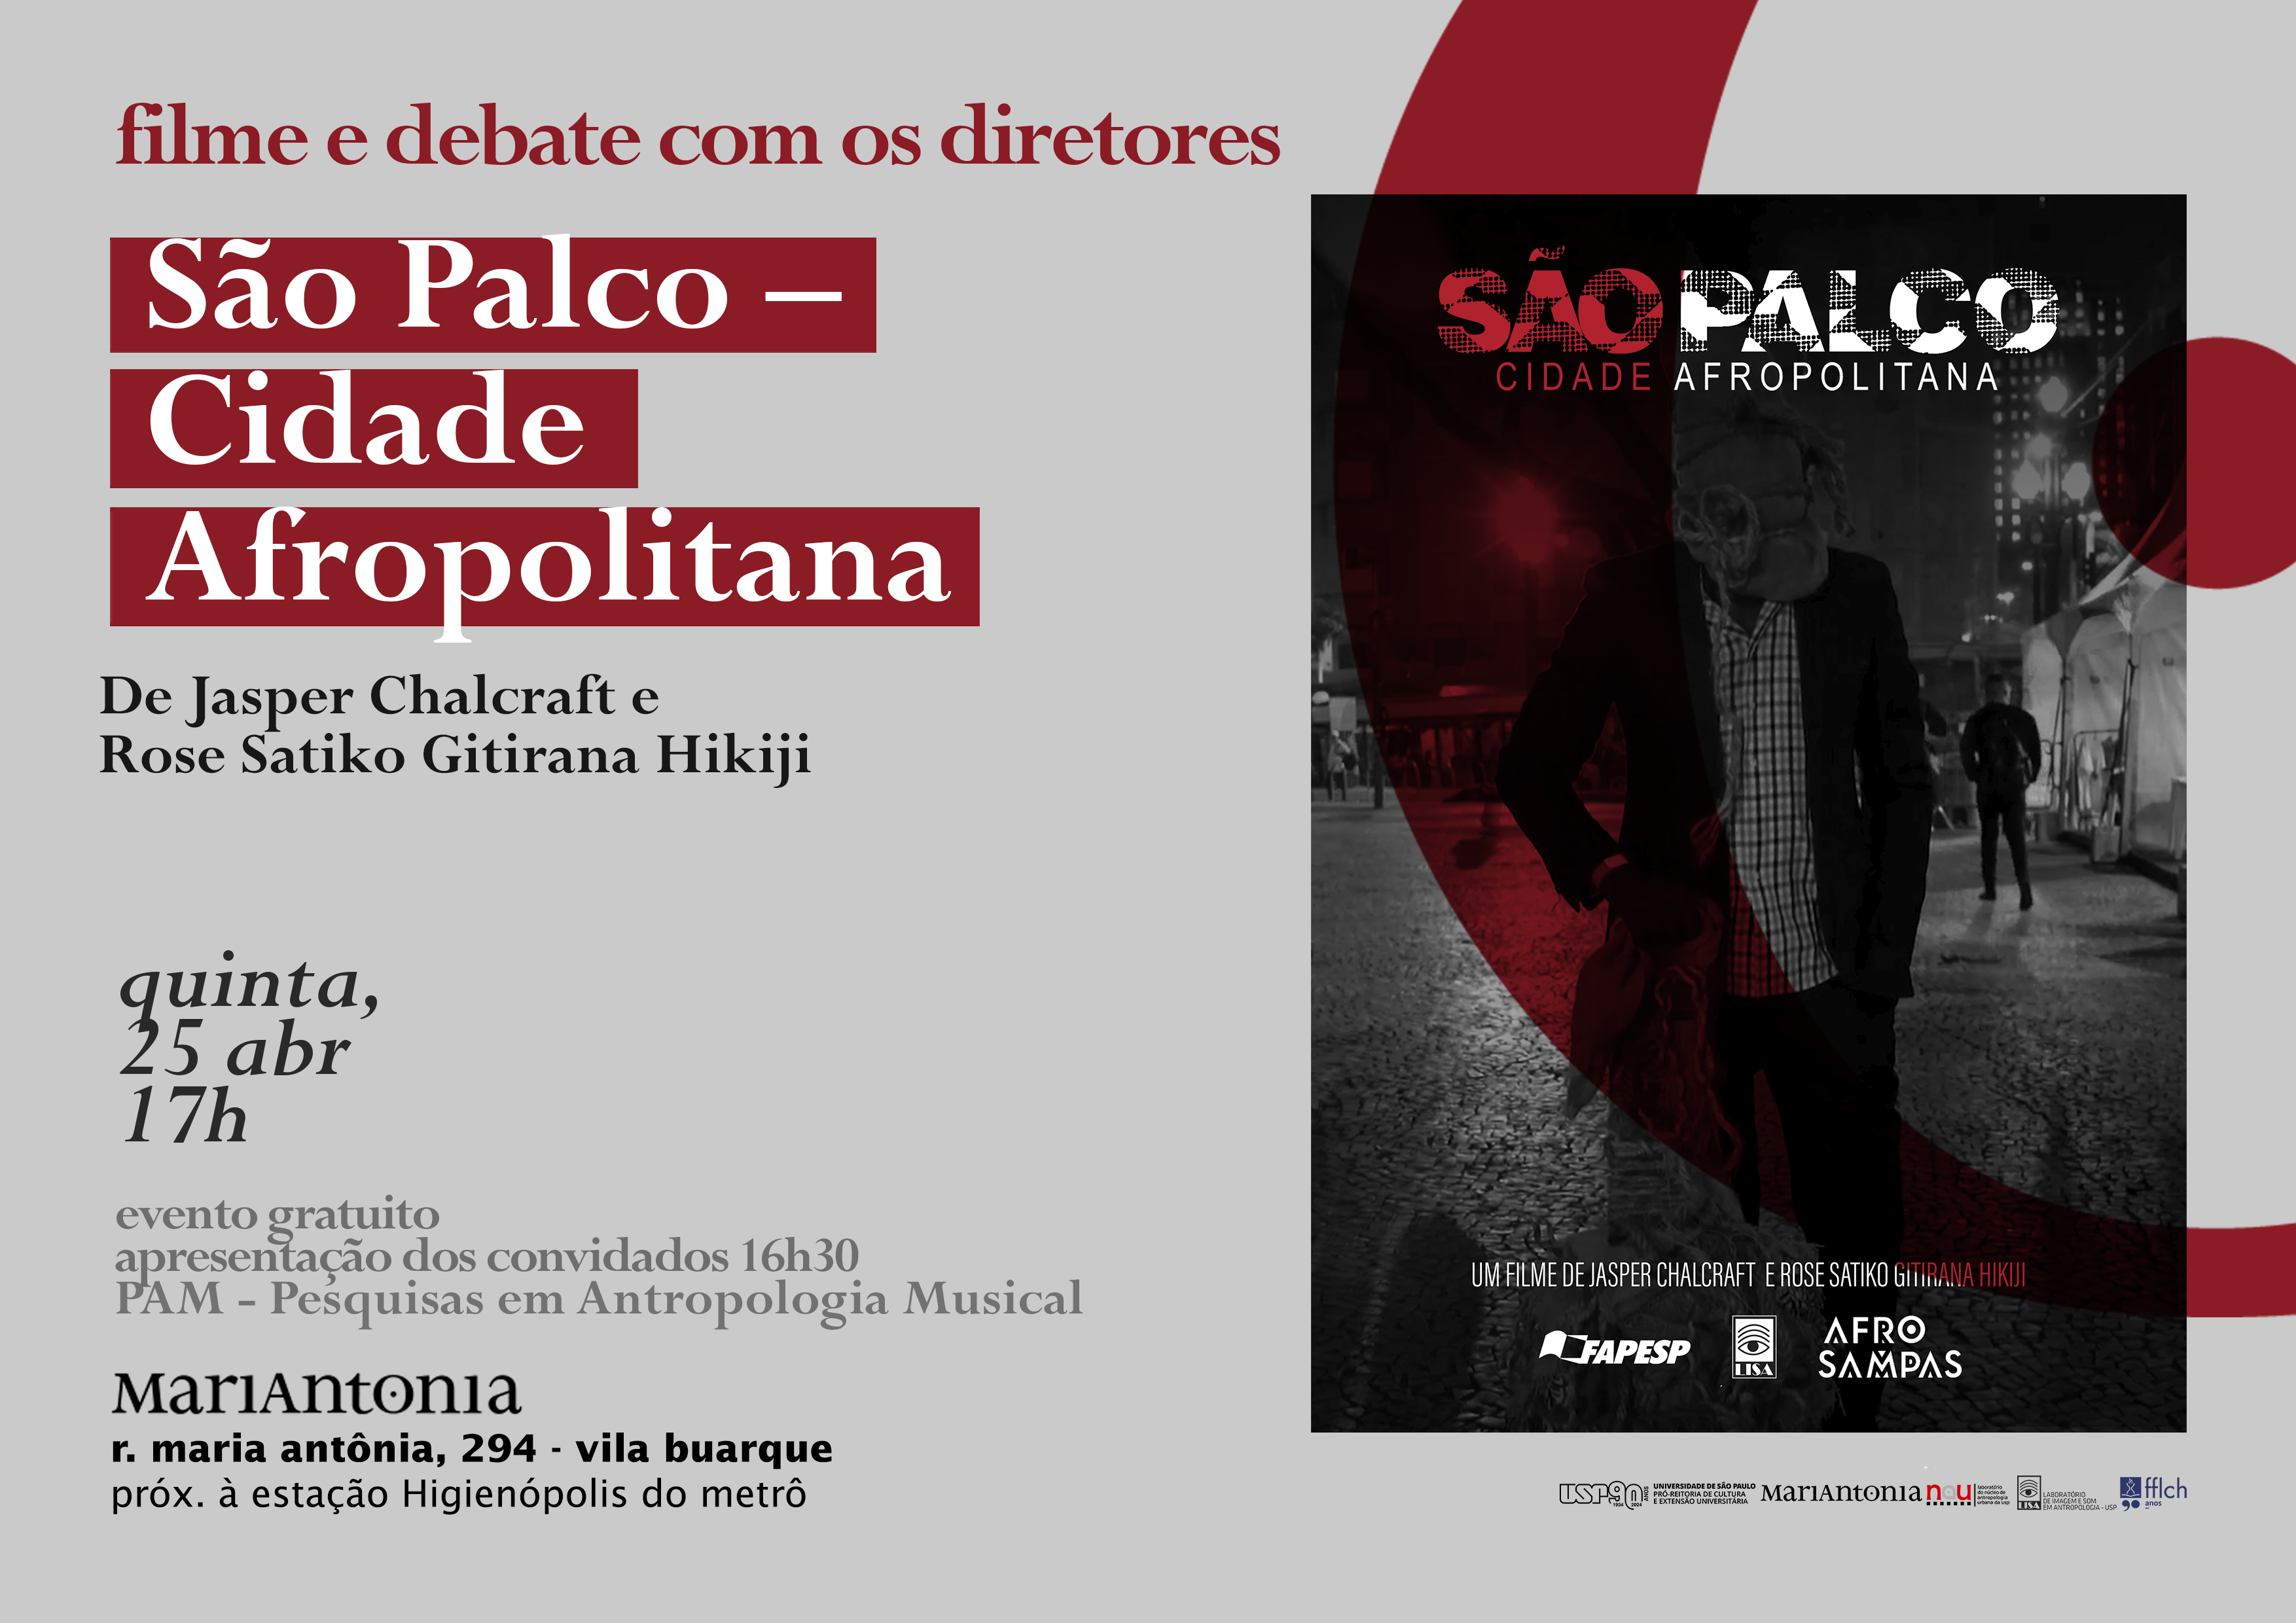 Premiere of the film "São Palco - Afropolitan City"